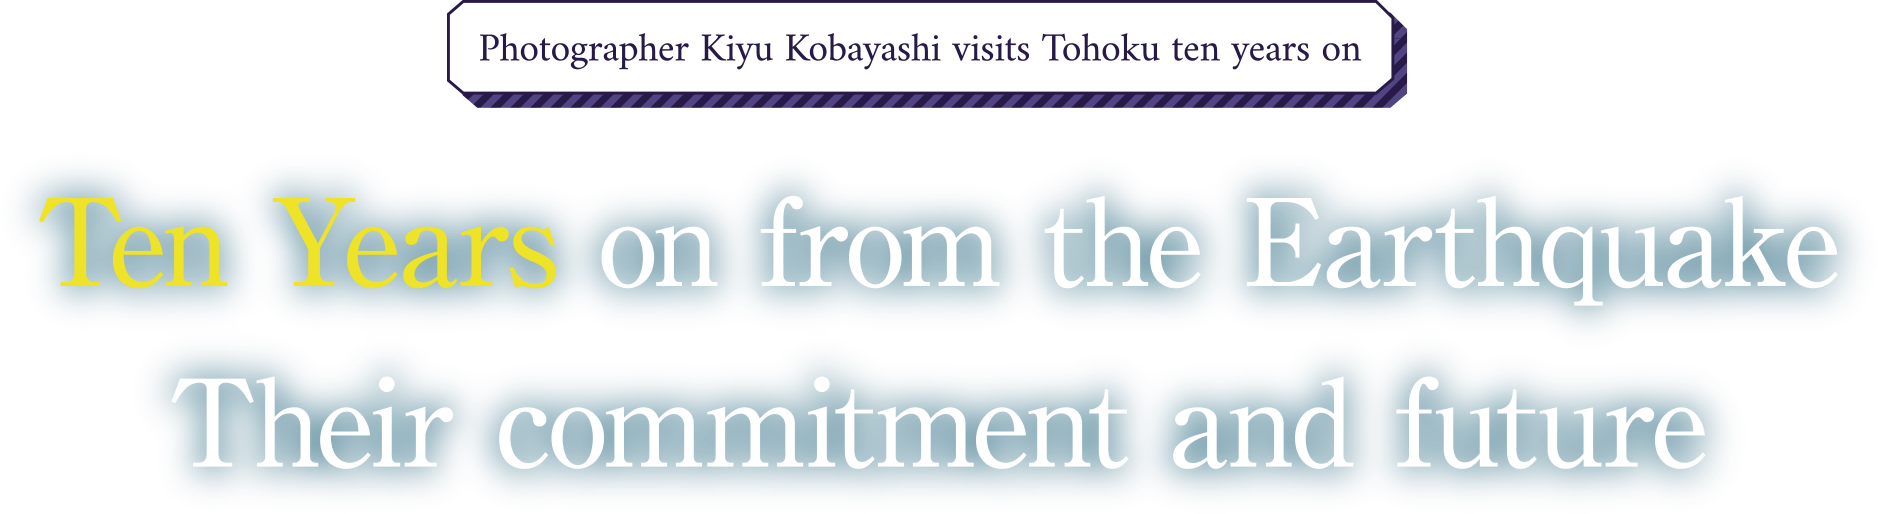 Photographer Kiyu Kobayashi visits Tohoku ten years on / Ten Years on from the Earthquake Their commitment and future